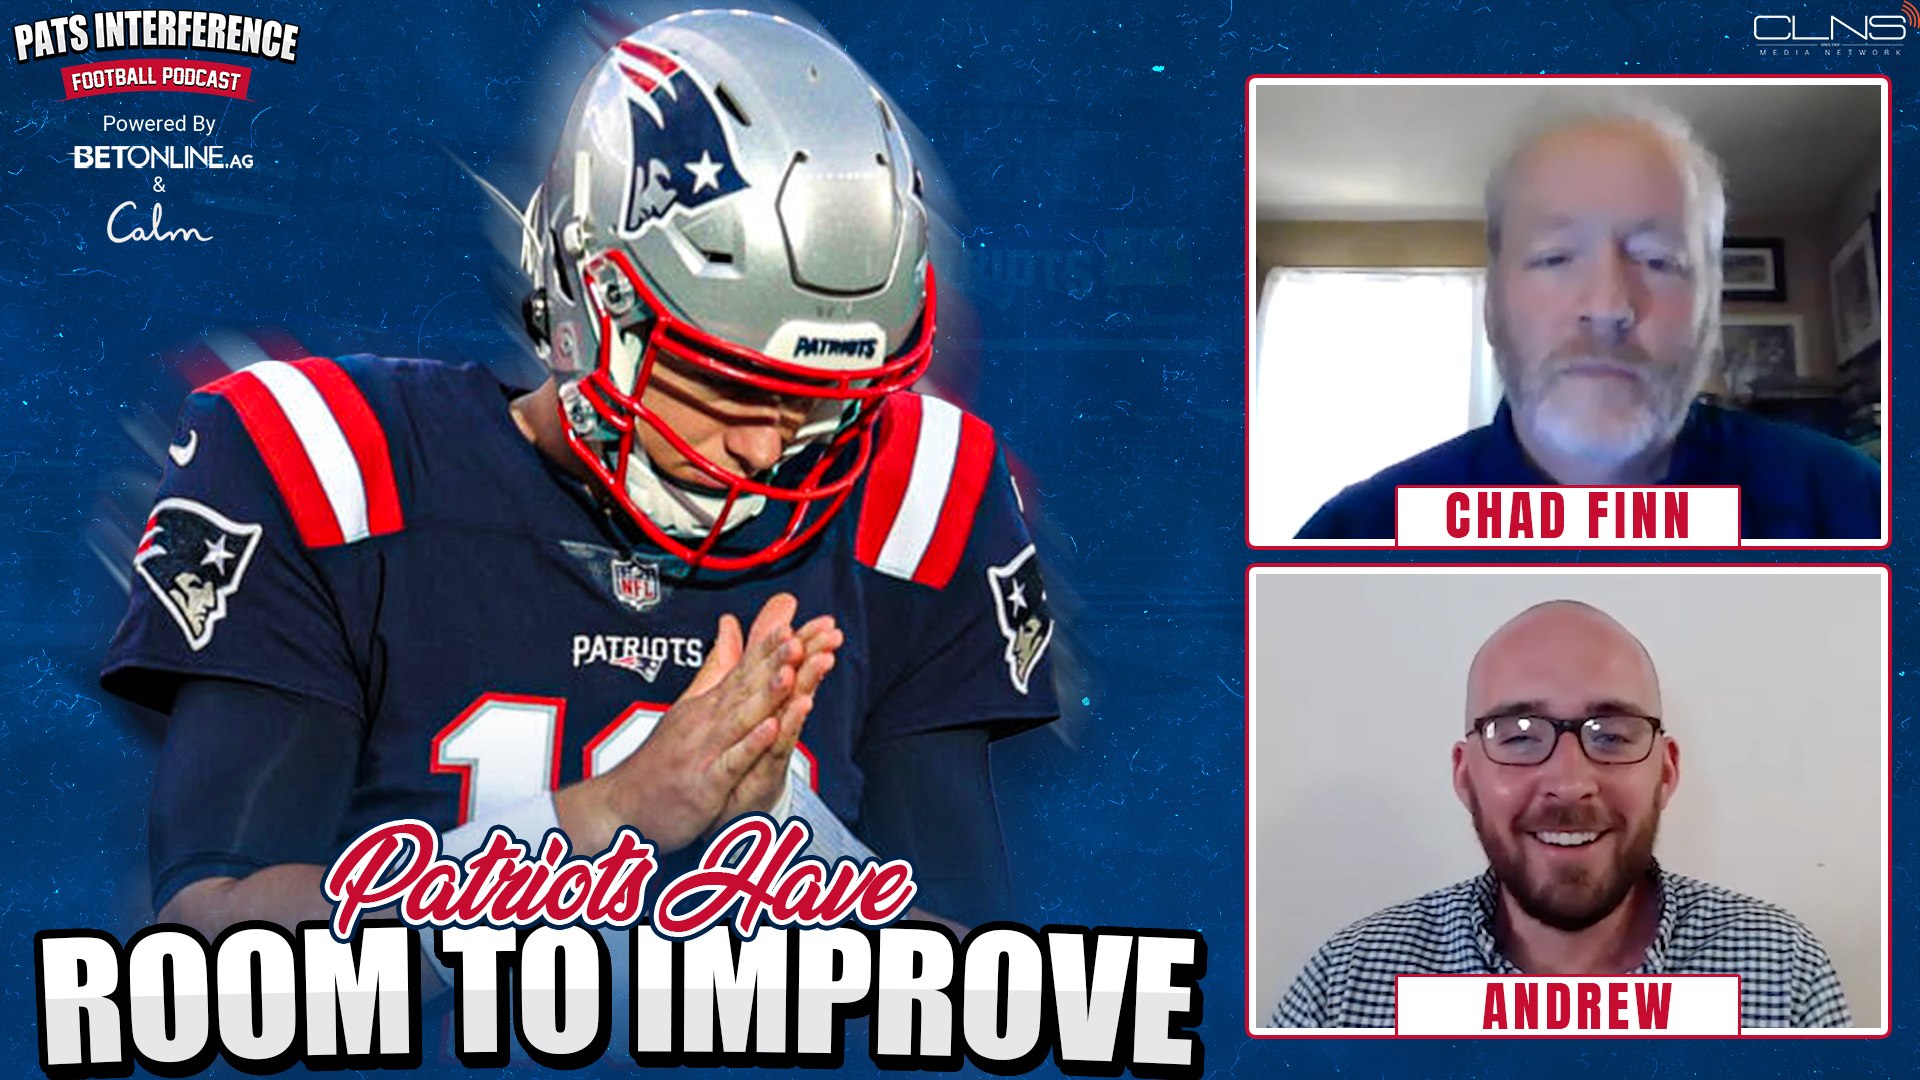 Chad Finn: The Patriots have found a familiar winning formula